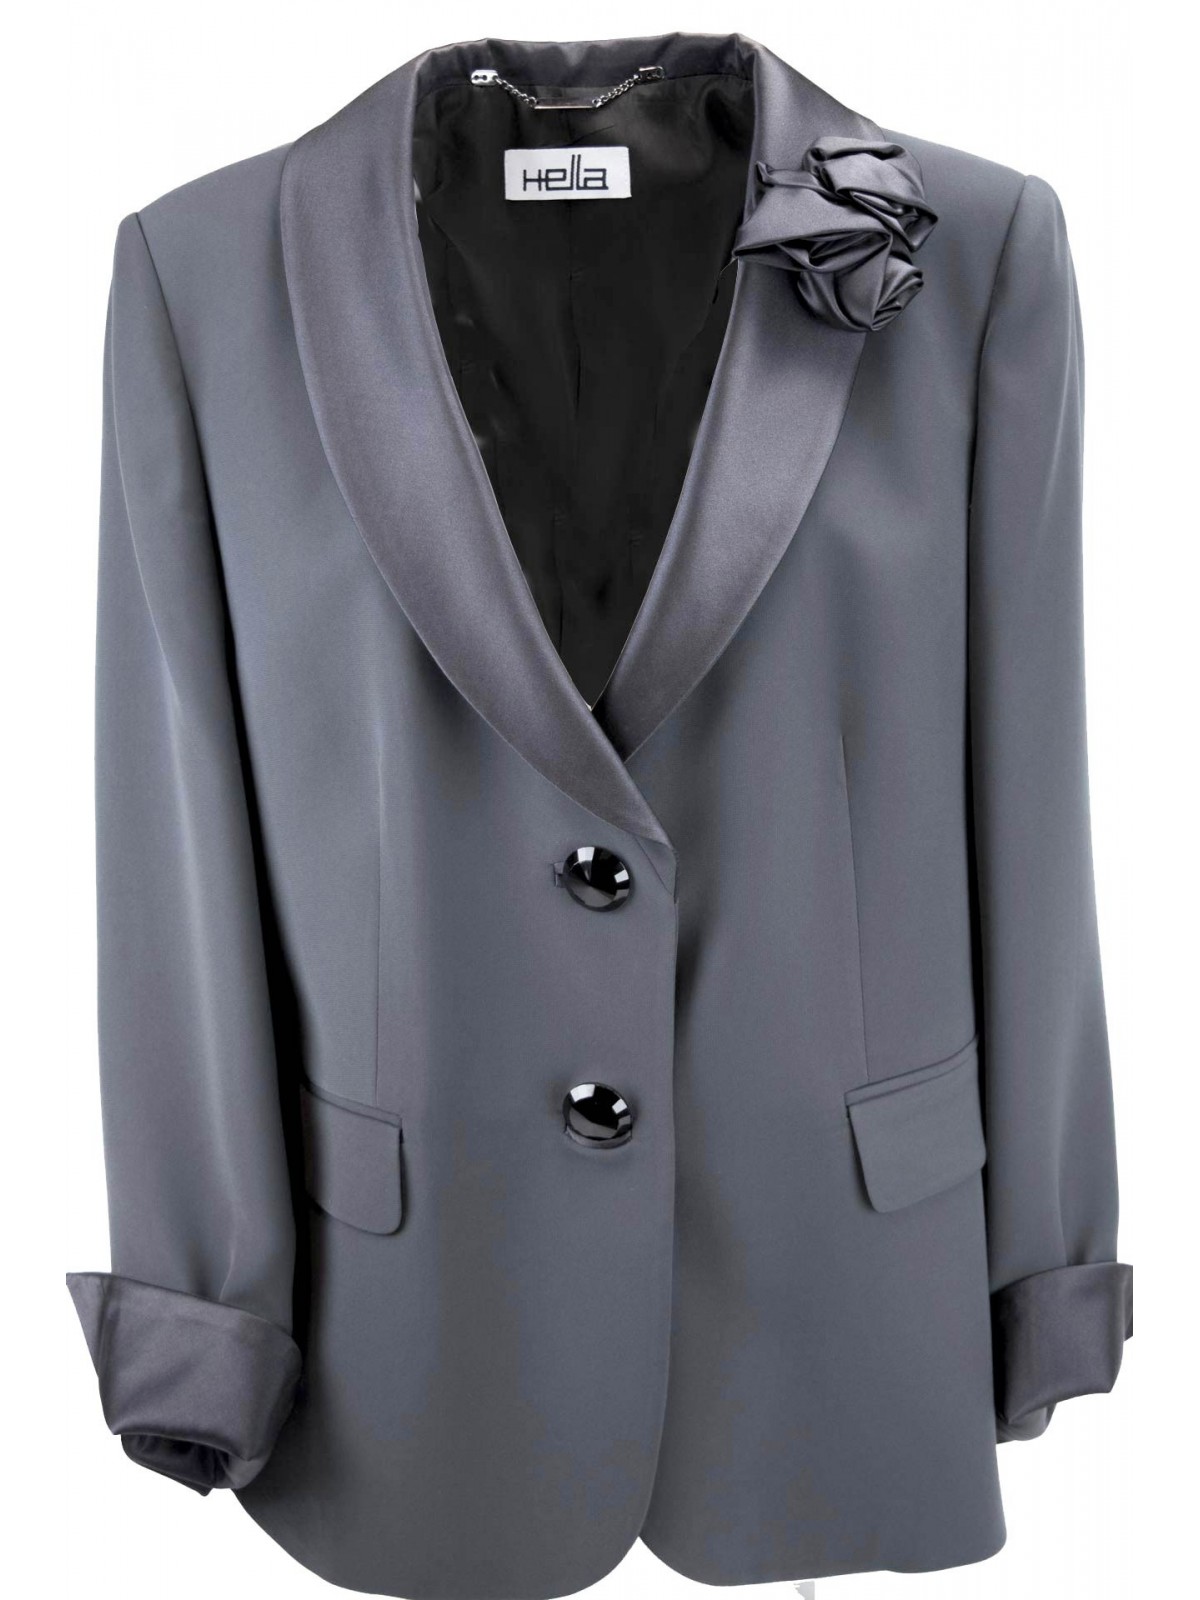 Tuxedo jacket Women's Grey size convenient - Blazer Elegant